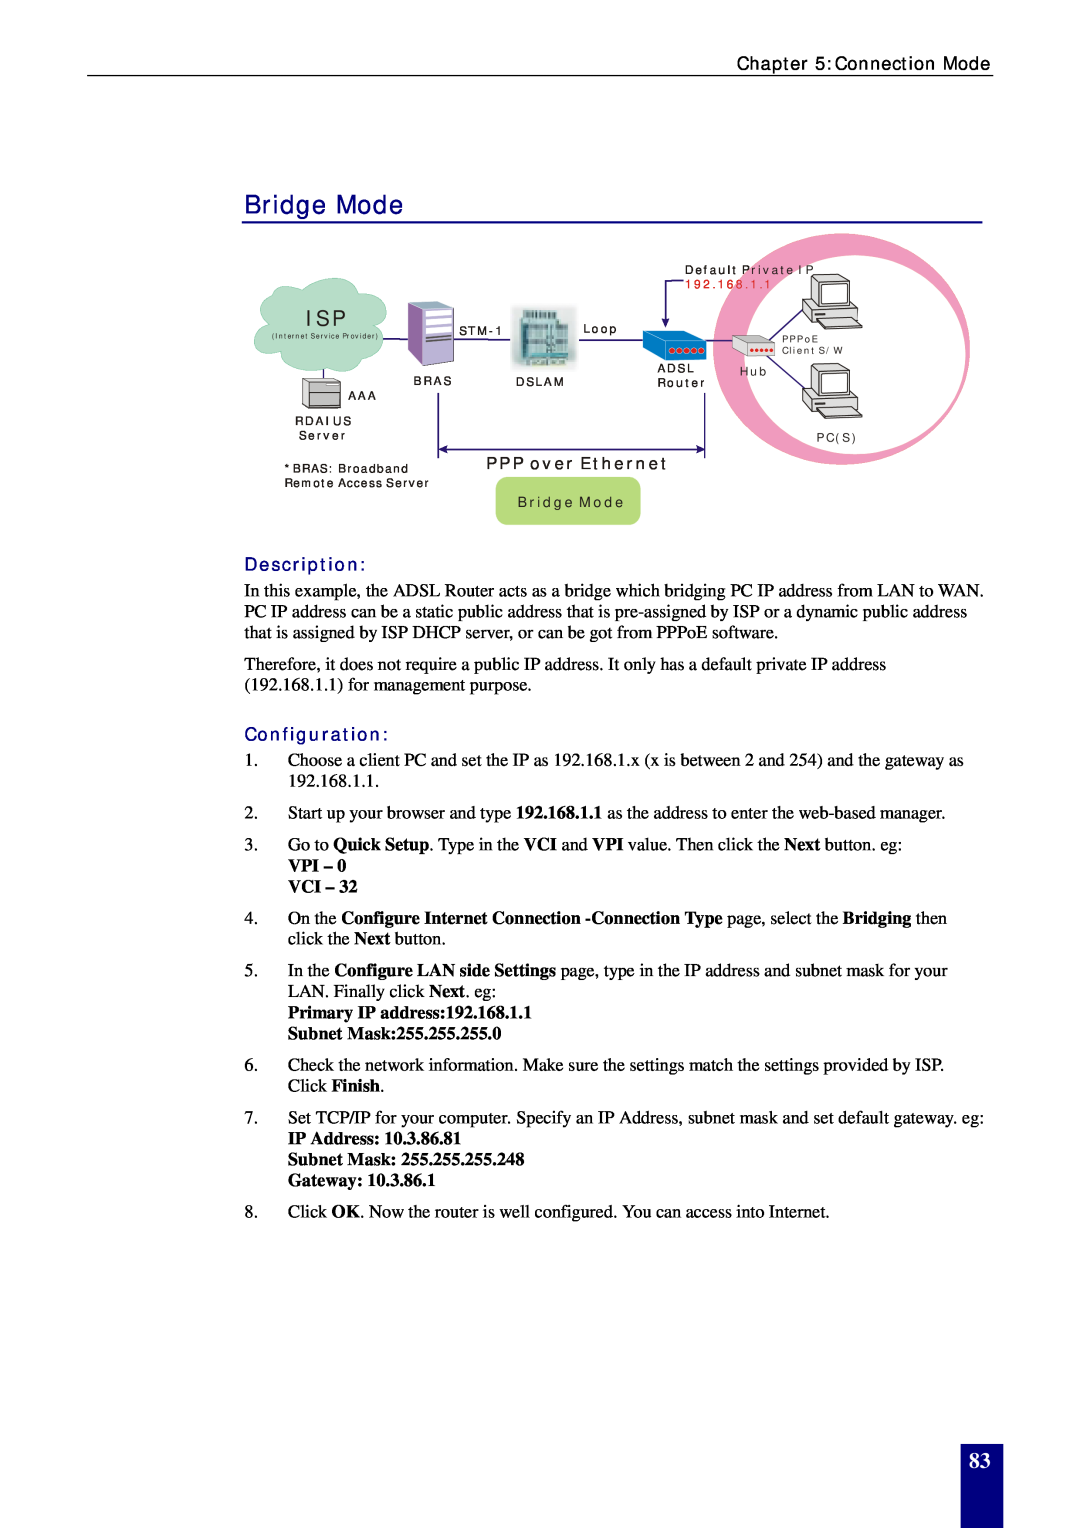 Dynalink RTA770W user manual Bridge Mode, Description, Configuration, VPI - 0 VCI, IP Address Subnet Mask Gateway 